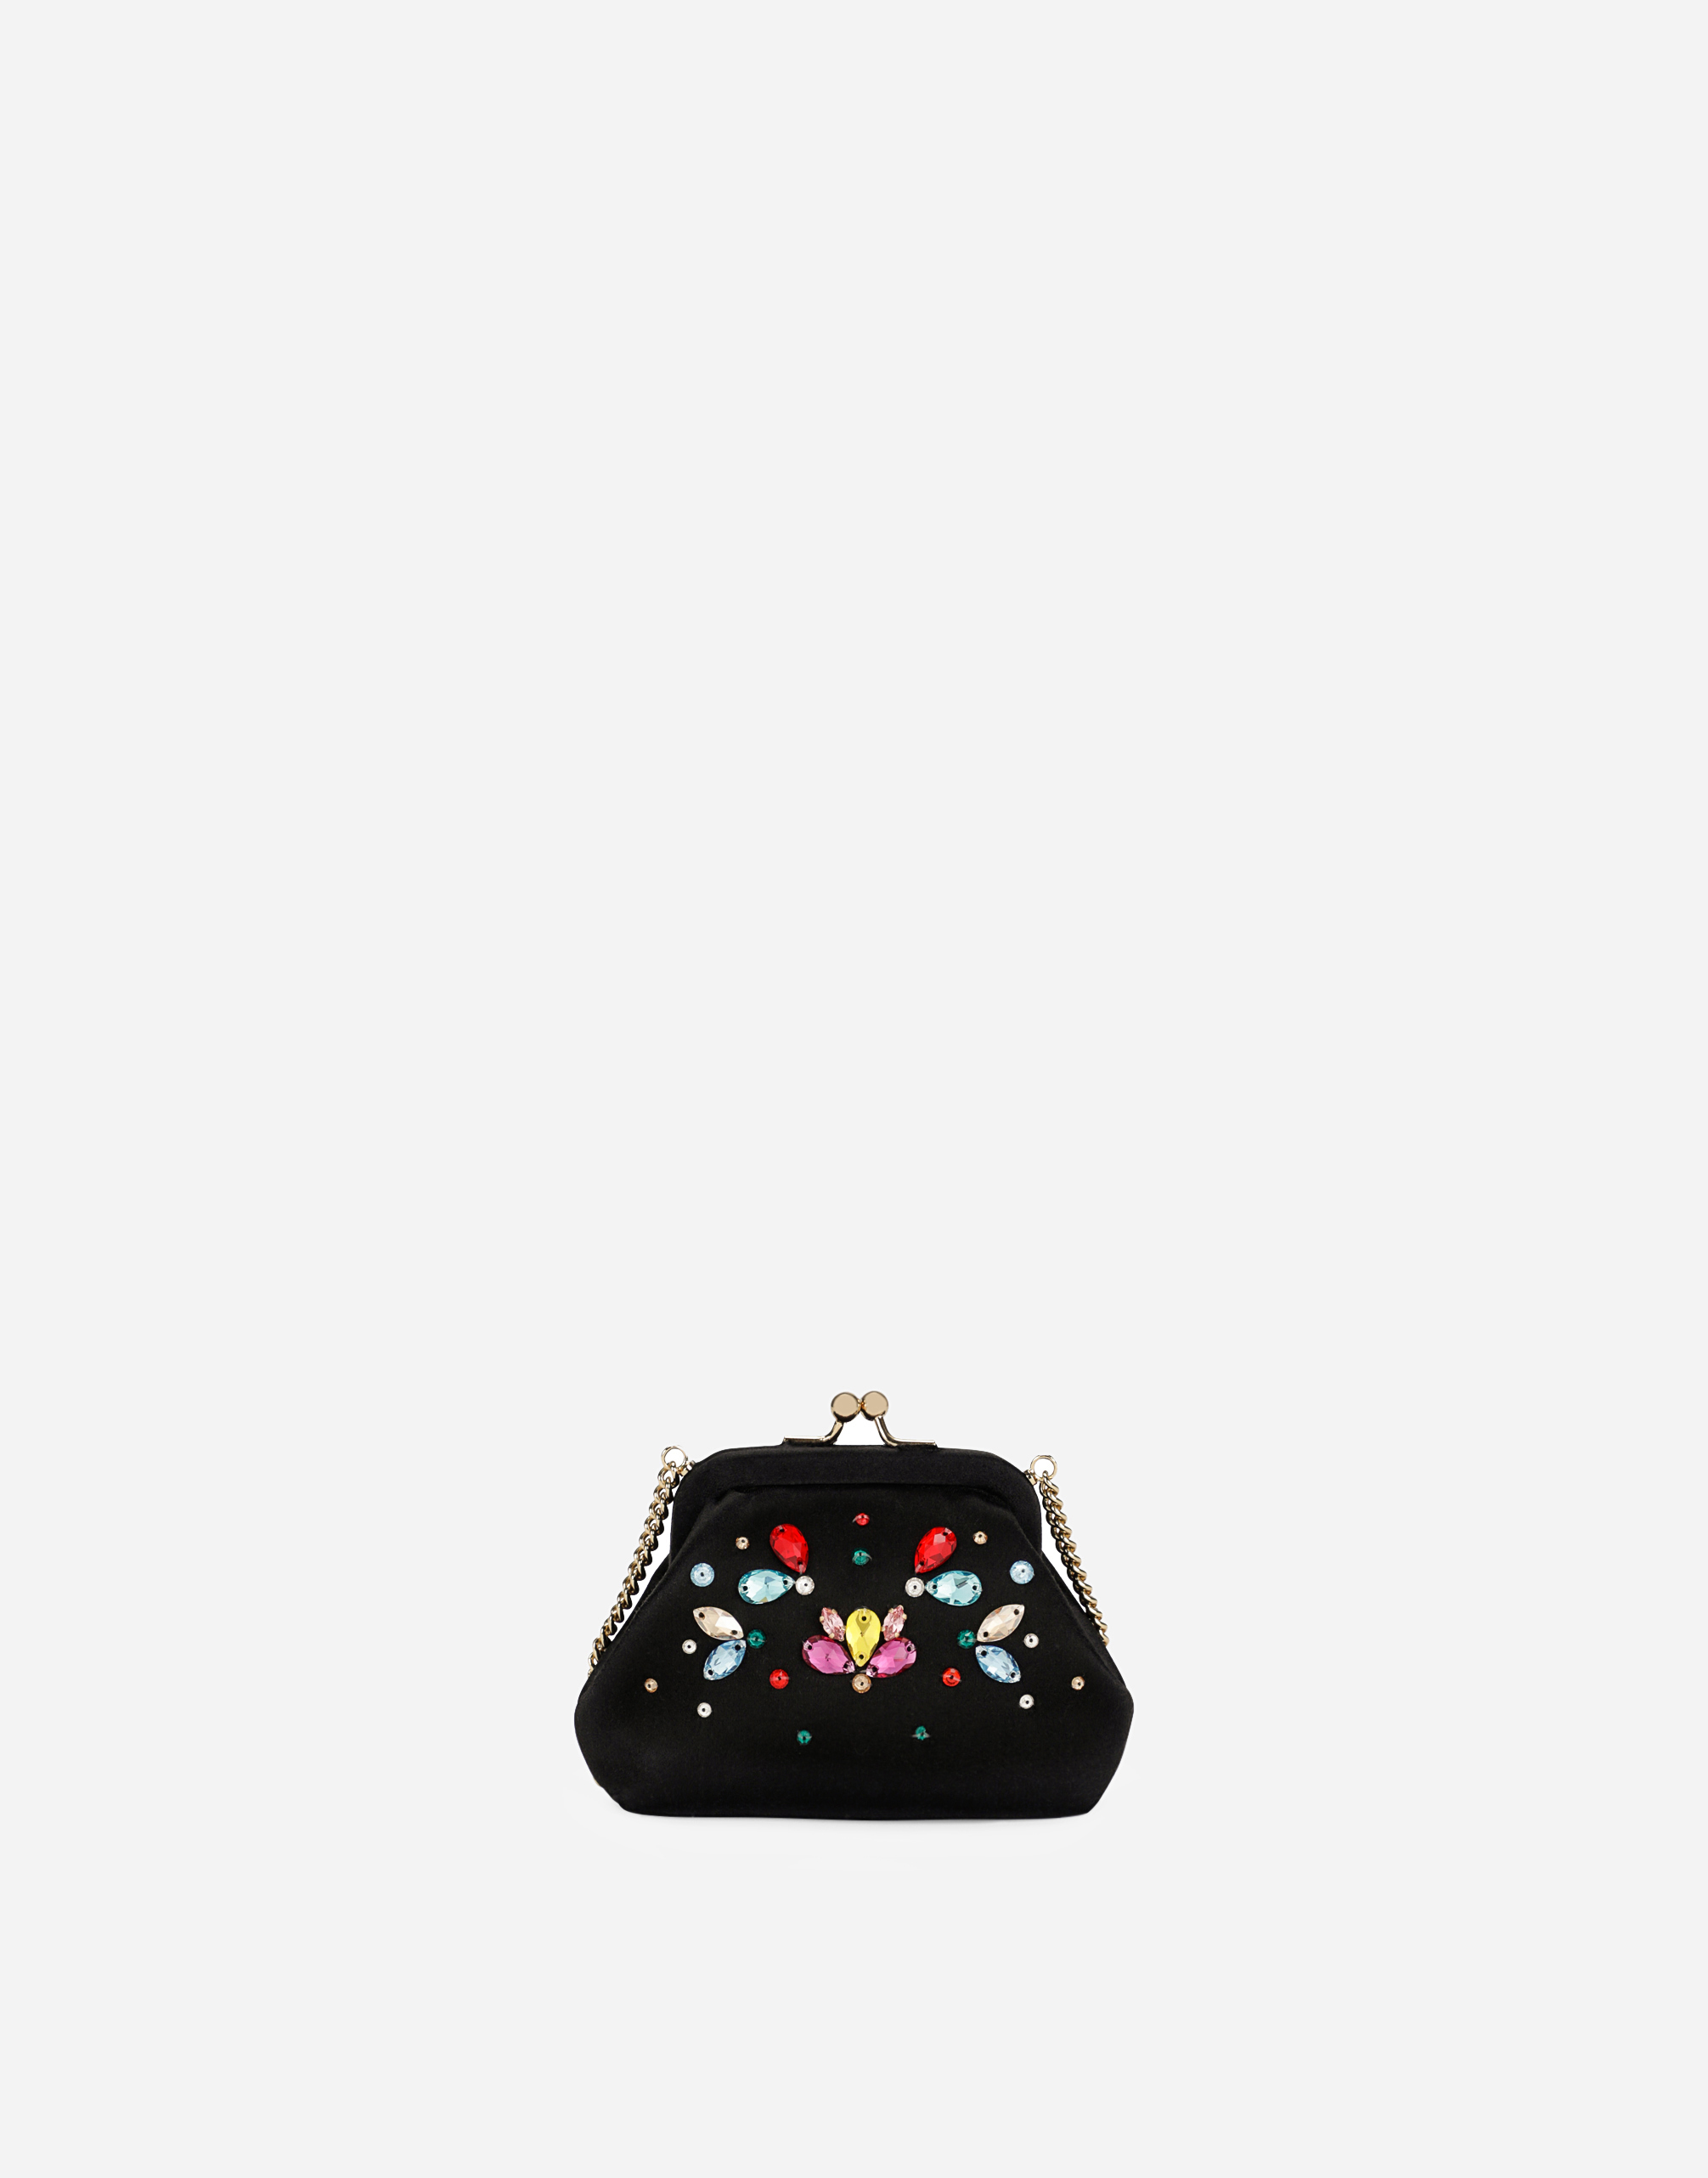 Satin shoulder bag with multi-colored crystals in Black